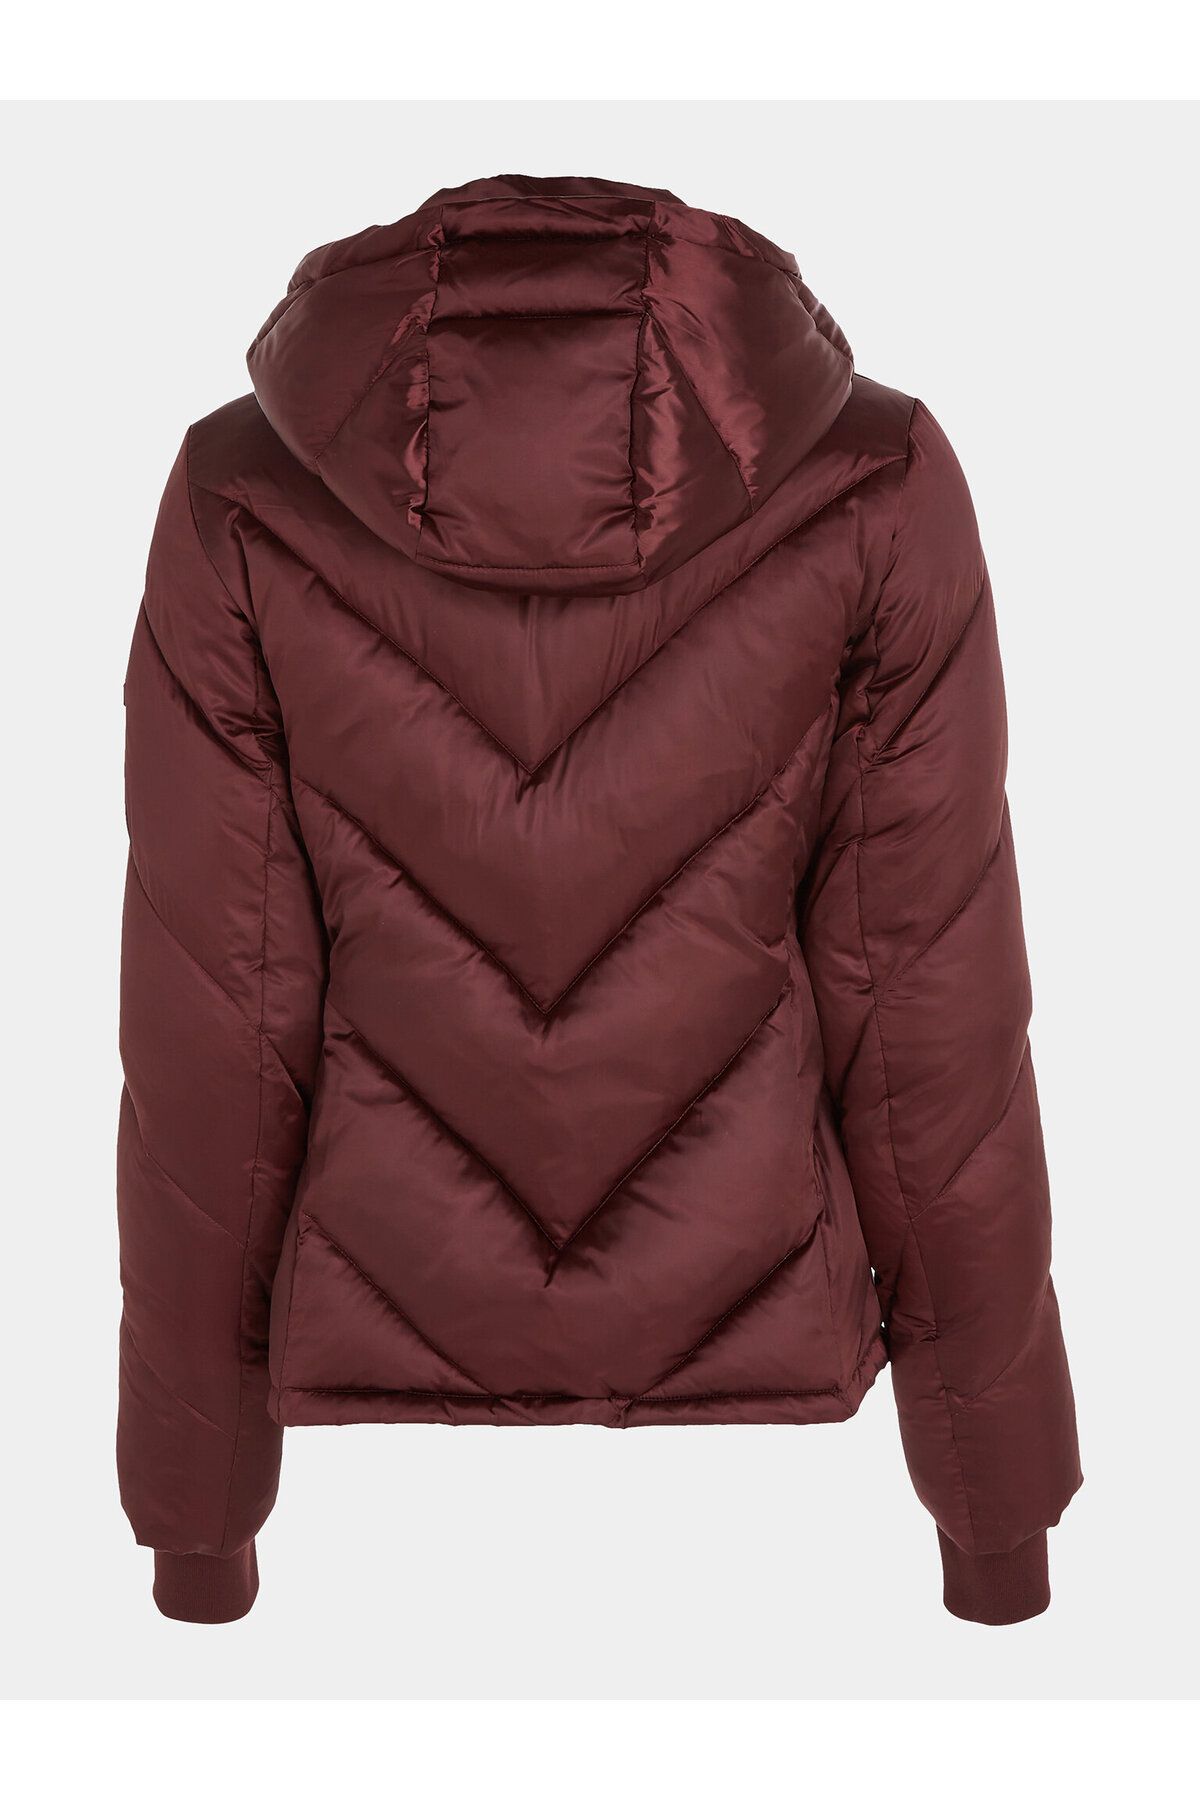 Calvin Klein Winter - - Burgundy fit Relaxed - Jacket Trendyol